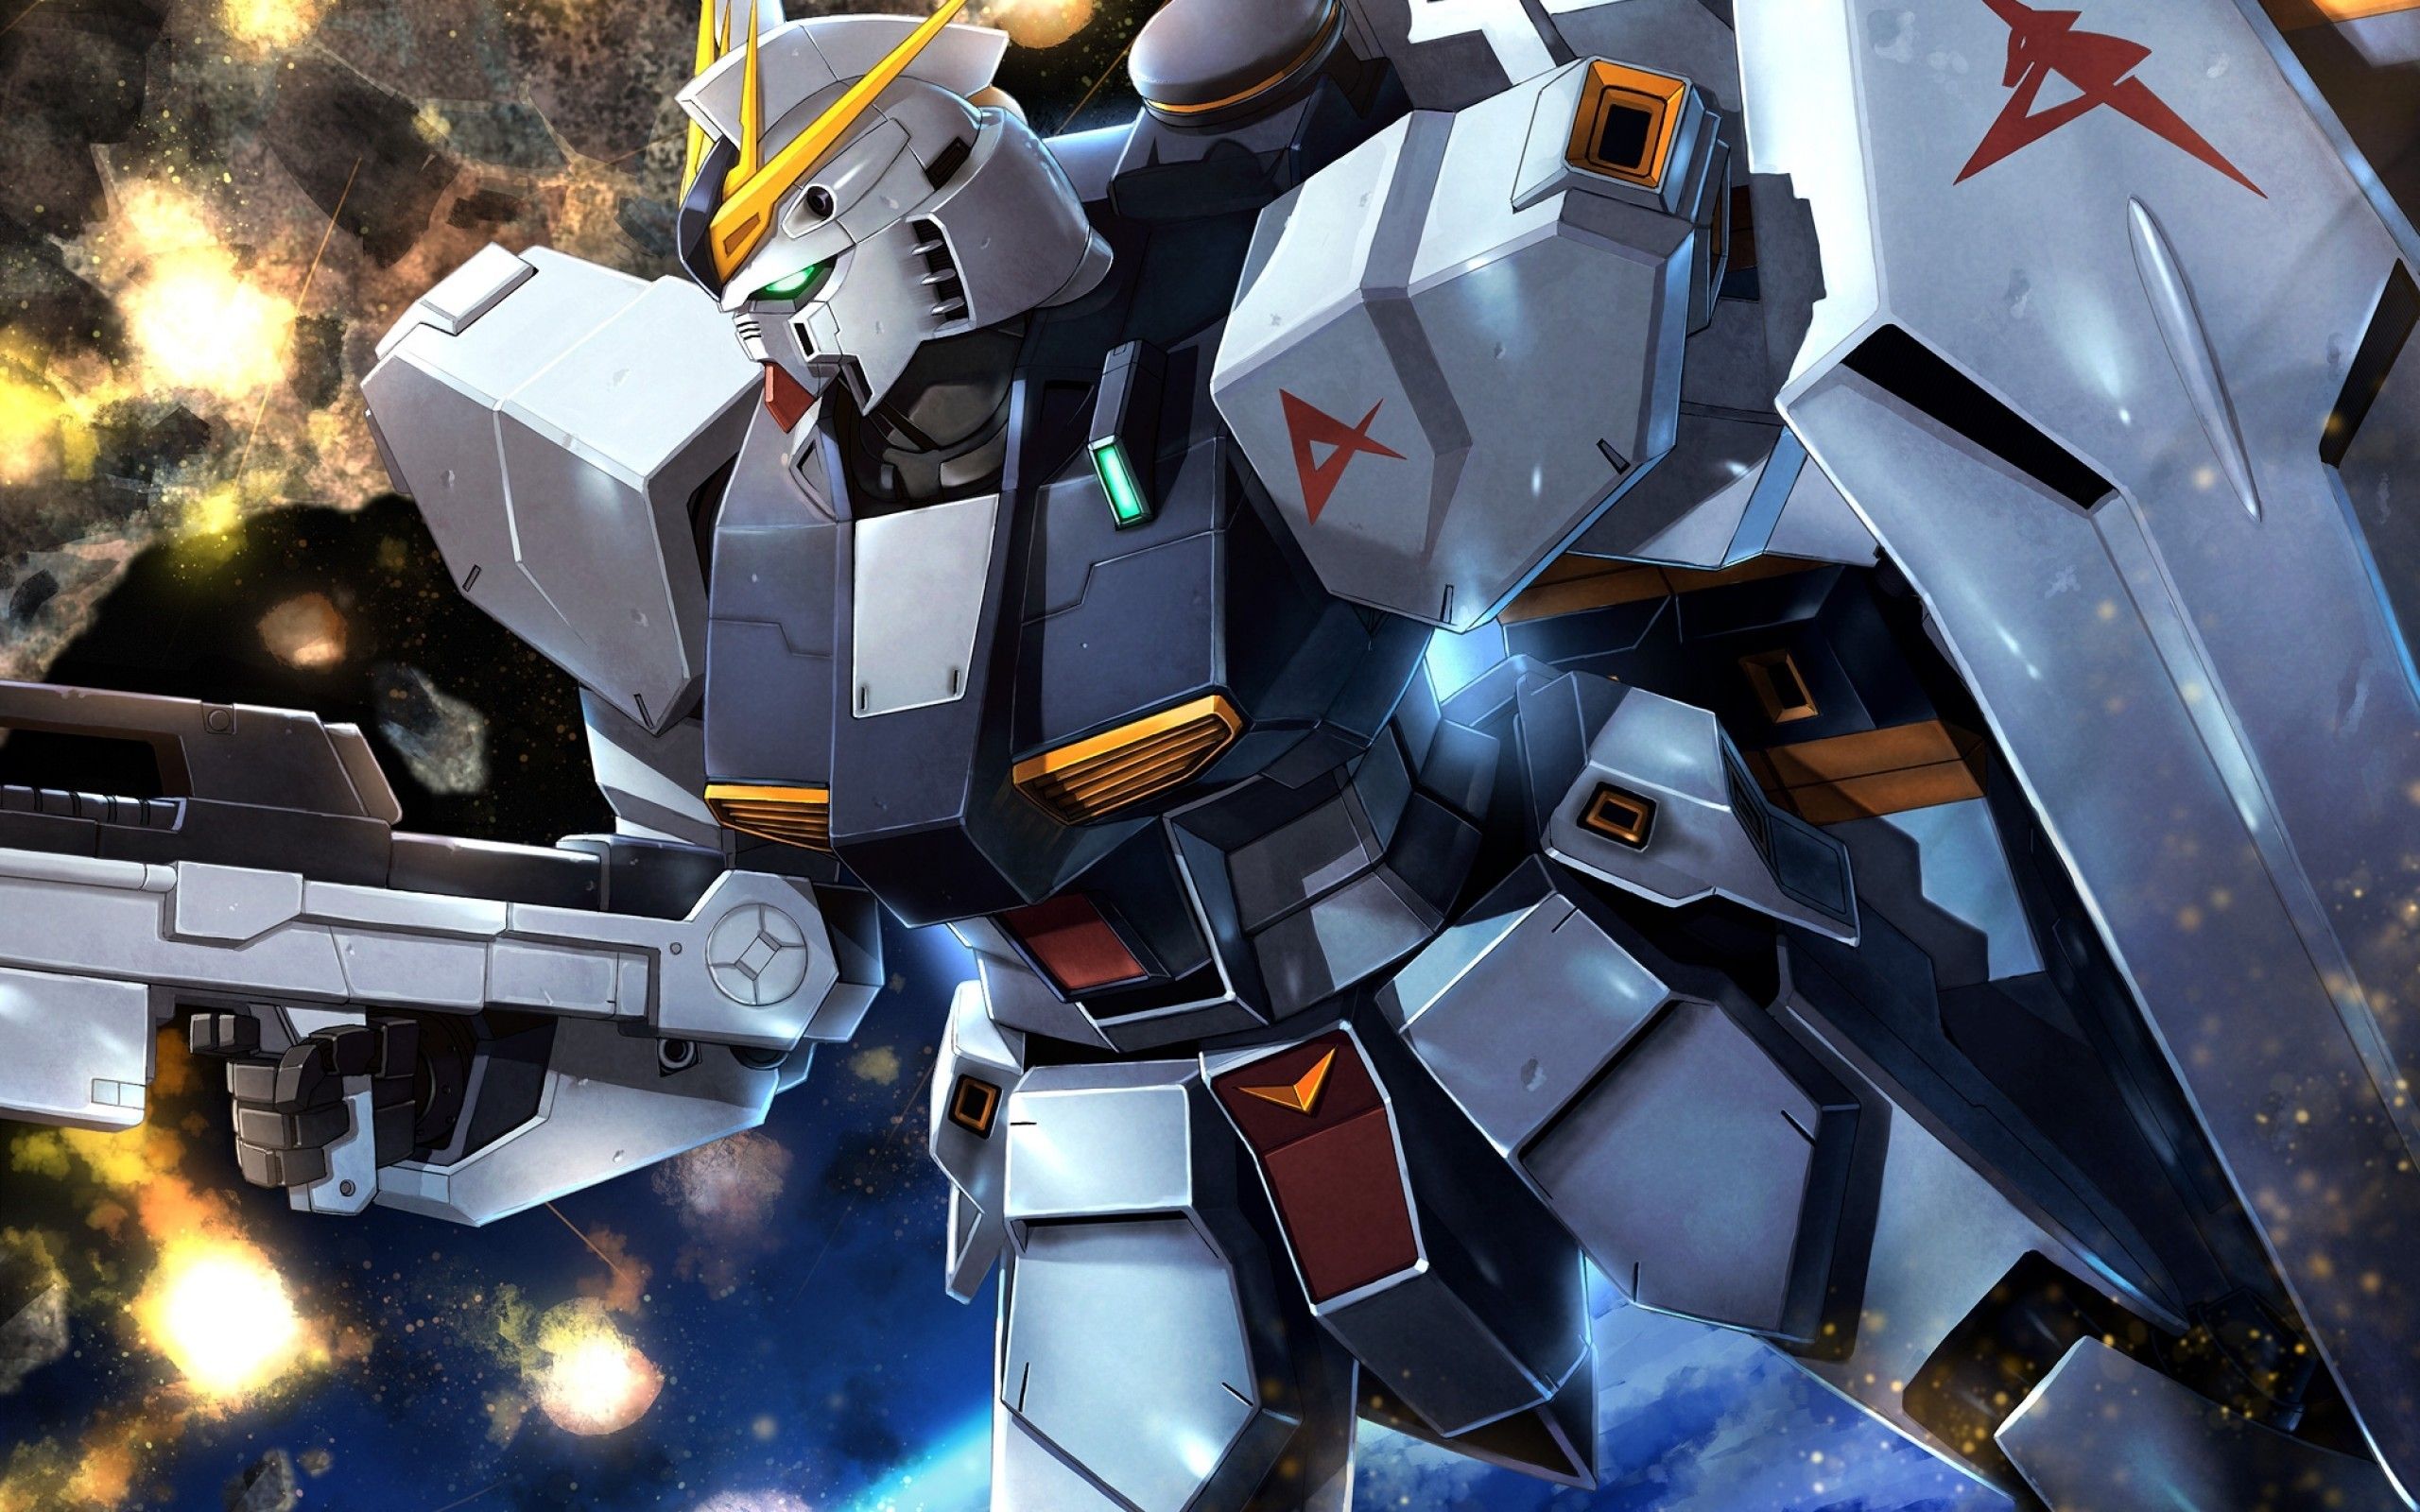 Download 2560x1600 Mobile Suit Gundam, Sci Fi, Mecha, Robot Wallpaper For MacBook Pro 13 Inch